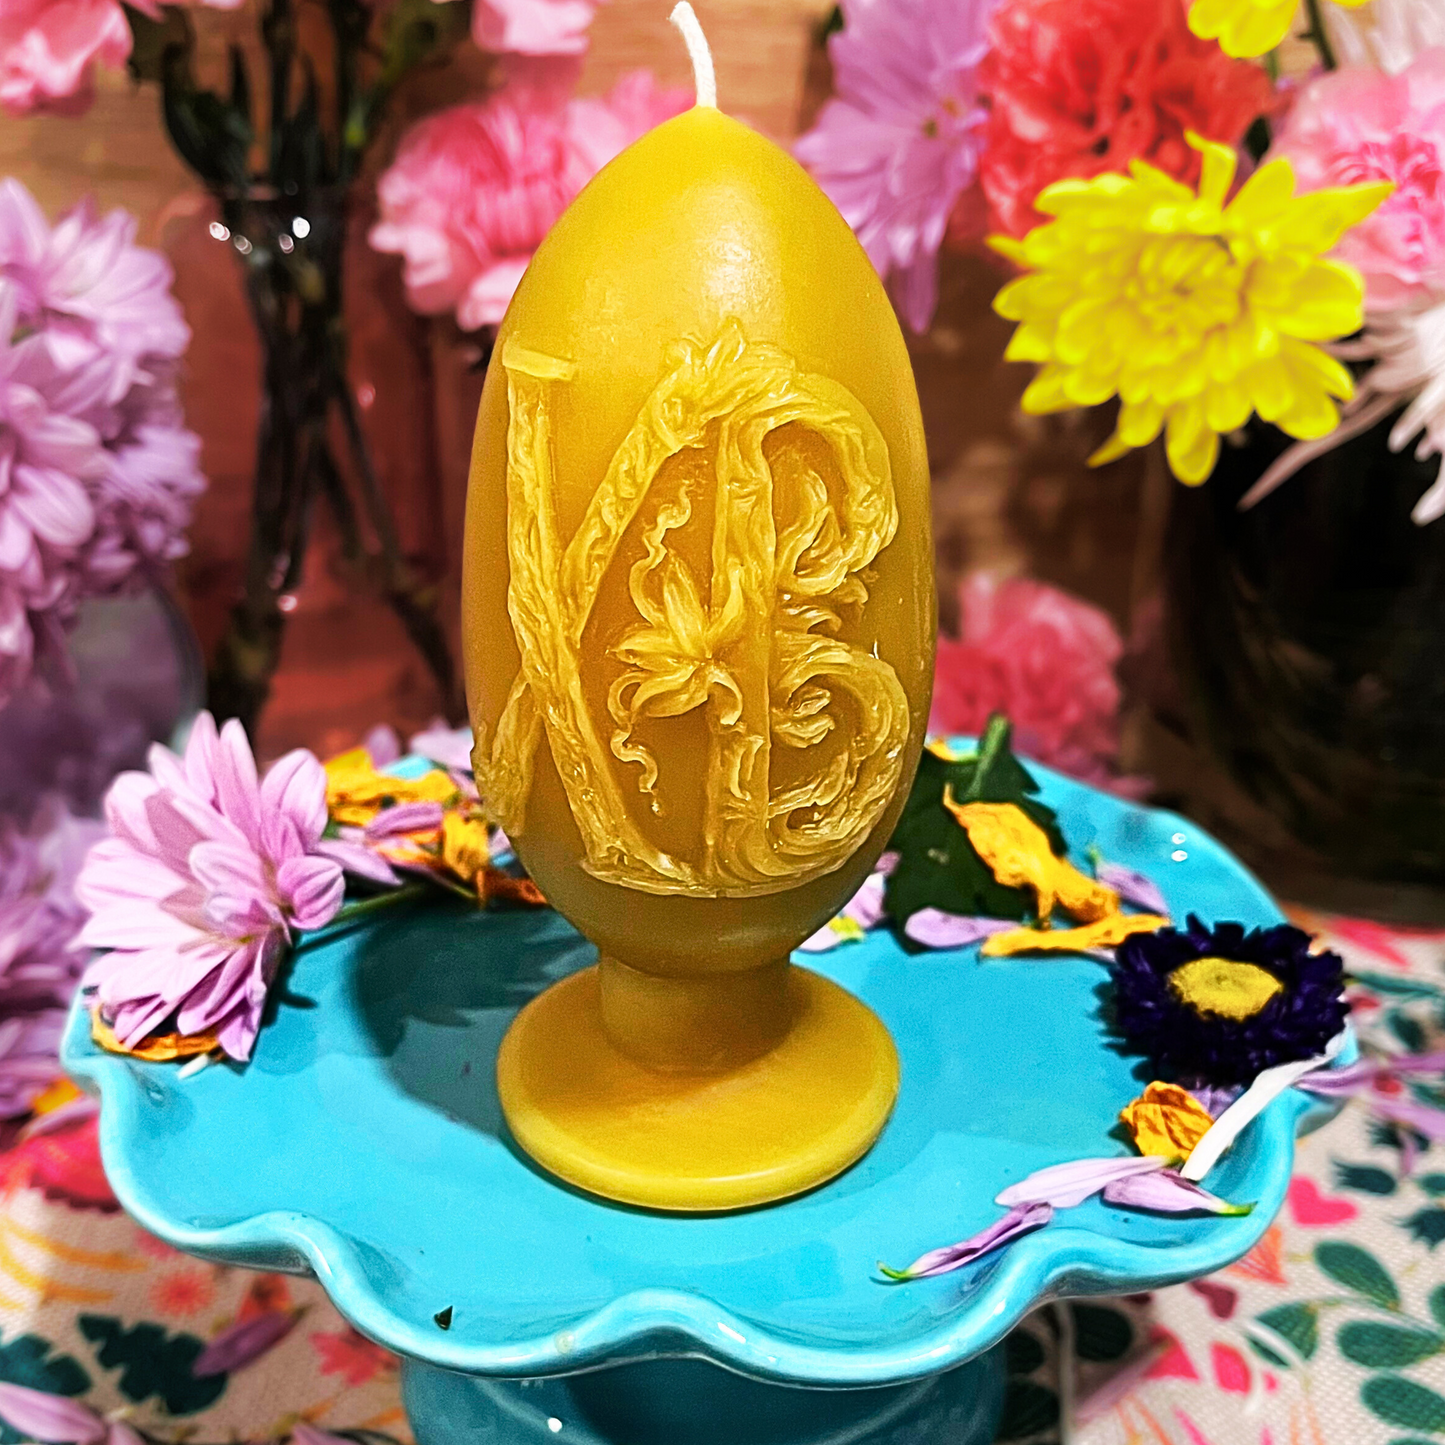 Khrystos Voskrese Golden Paschal Egg Beeswax Candle